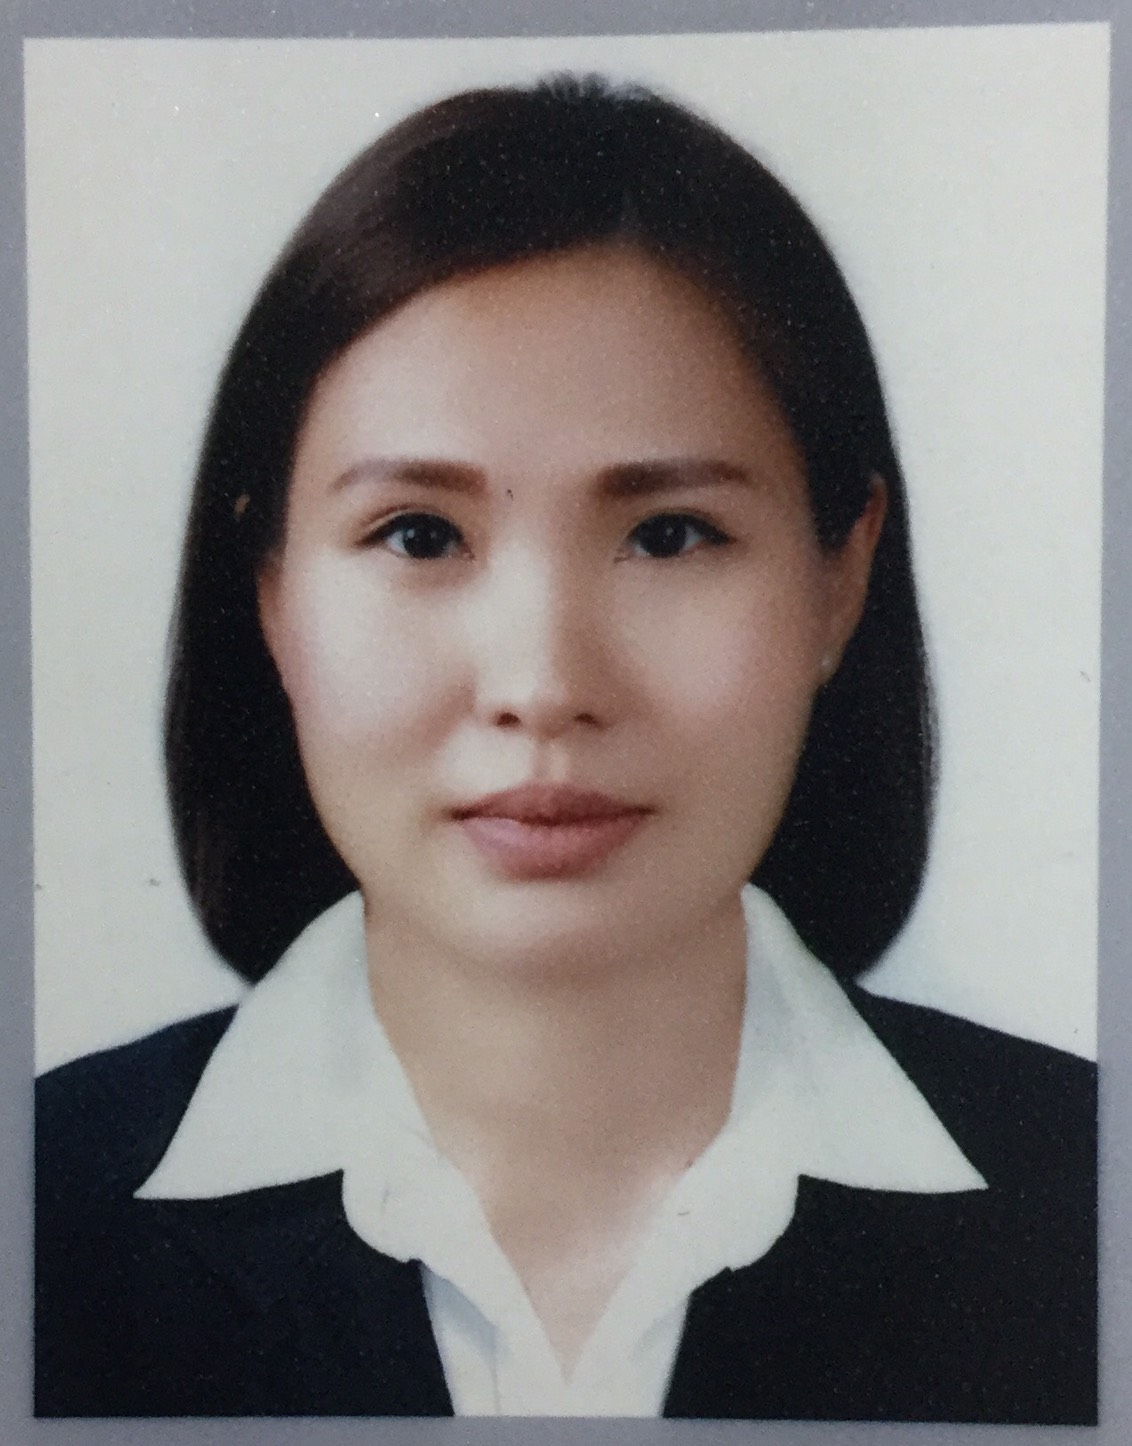 Ms. Srikwan Puntatip